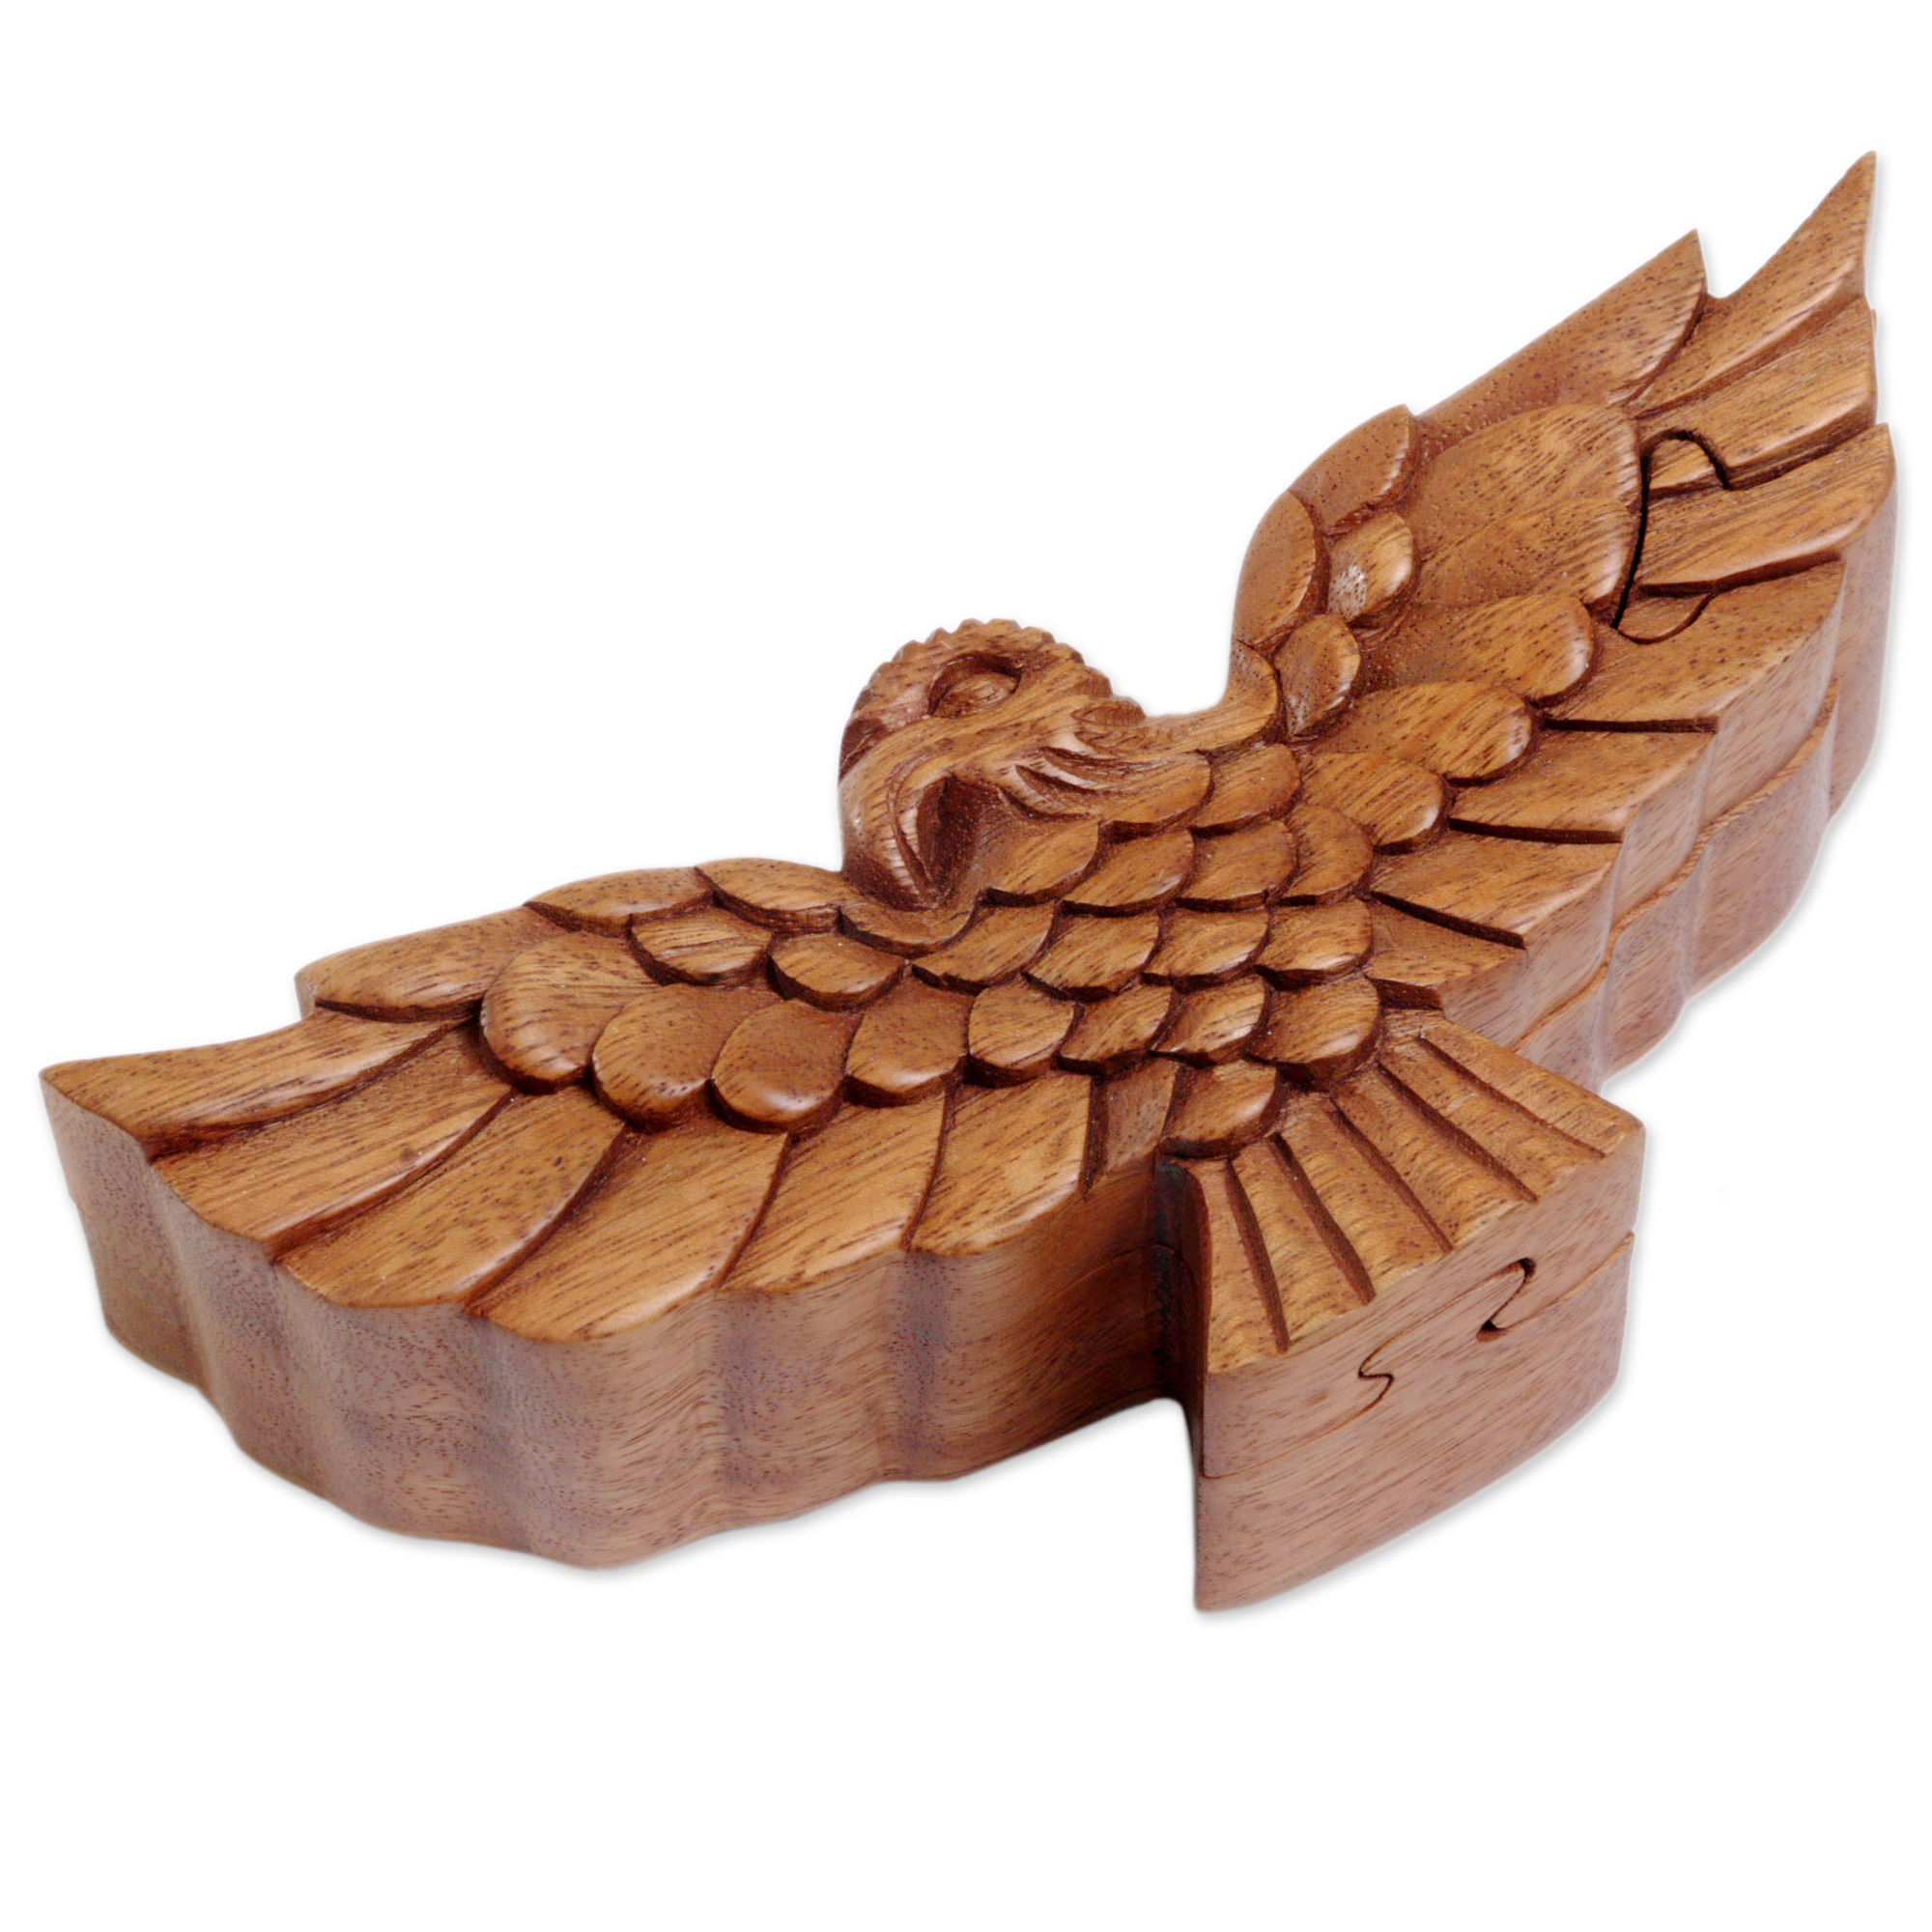 Hand Made Wood Puzzle Box of a Bird from Indonesia - Garuda Bird | NOVICA